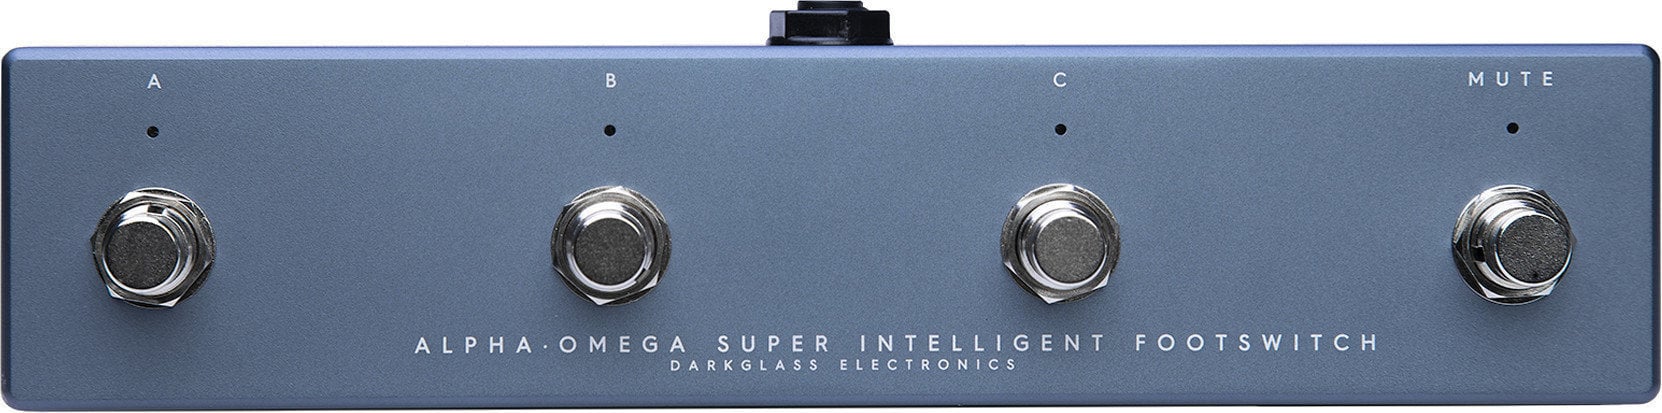 Fußschalter Darkglass Alpha Omega Super Intelligent Fußschalter